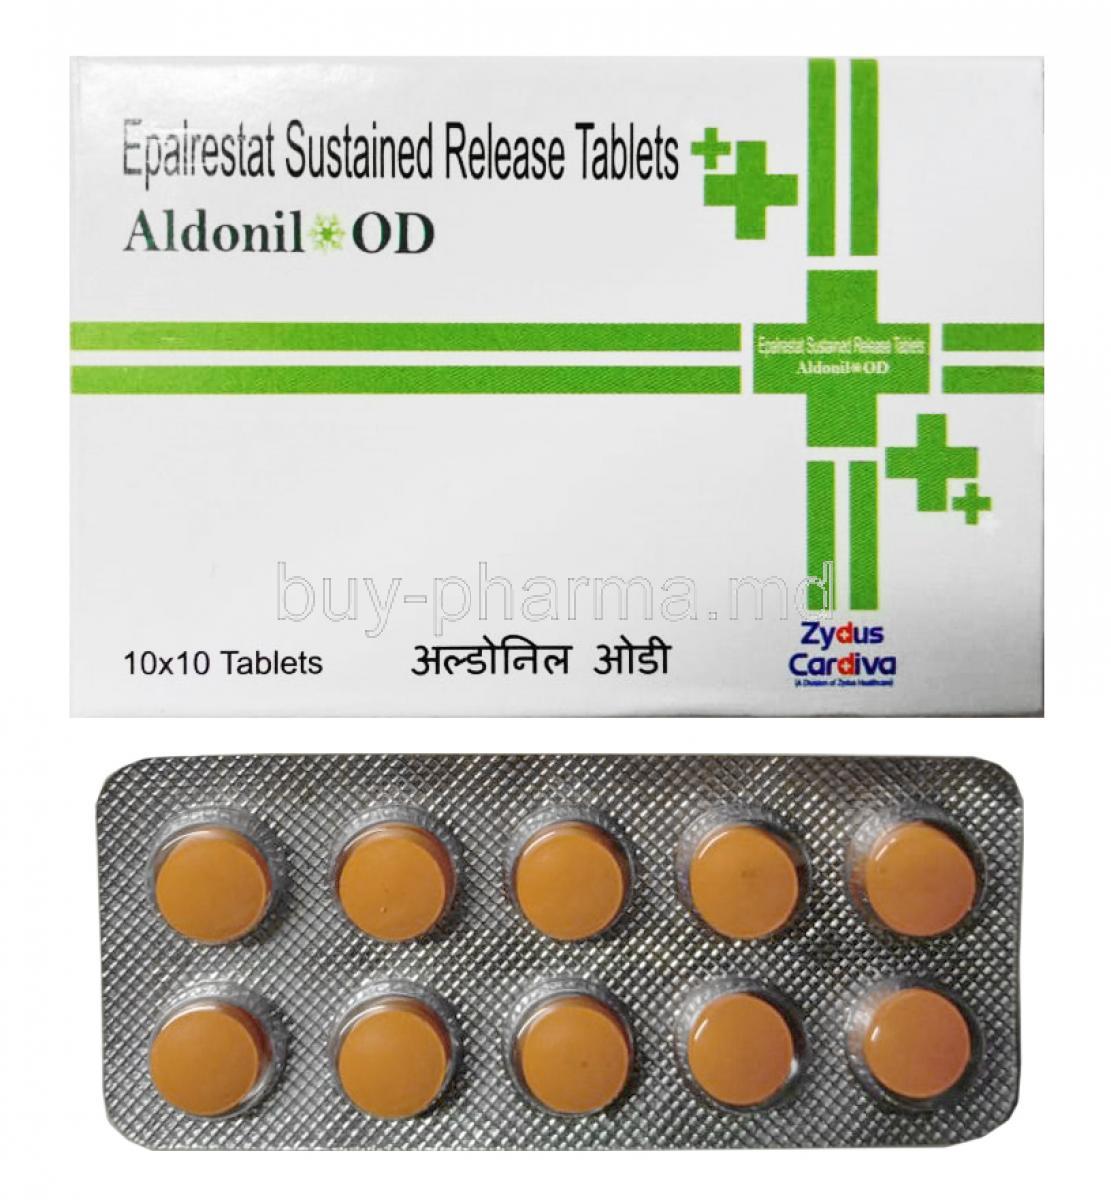 Aldonil OD, Epalrestat 150mg box and tablet